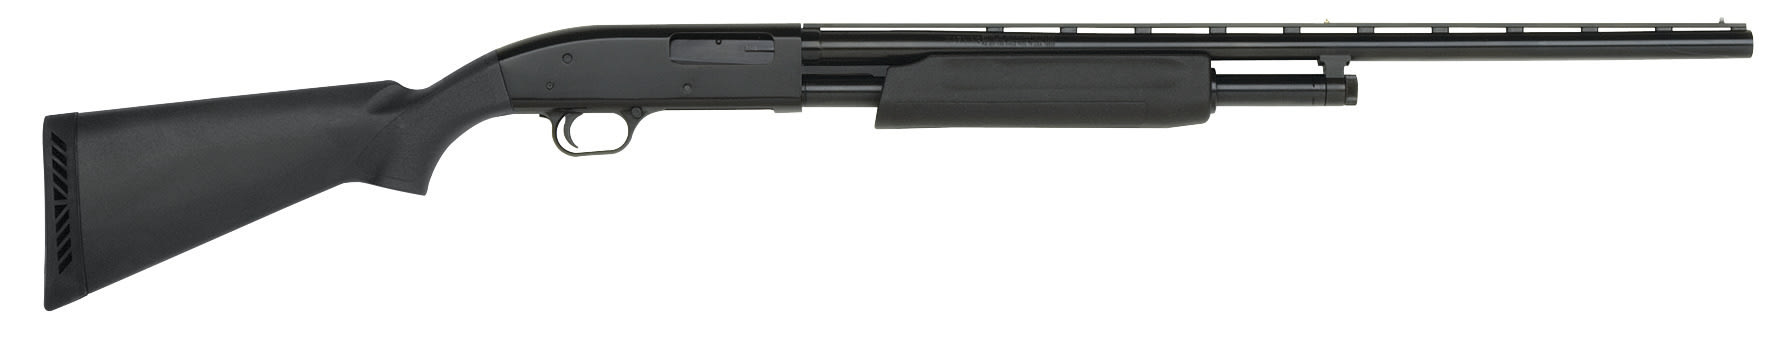 Mossberg Maverick 88 12 Gauge All-Purpose Pump-Action Shotgun